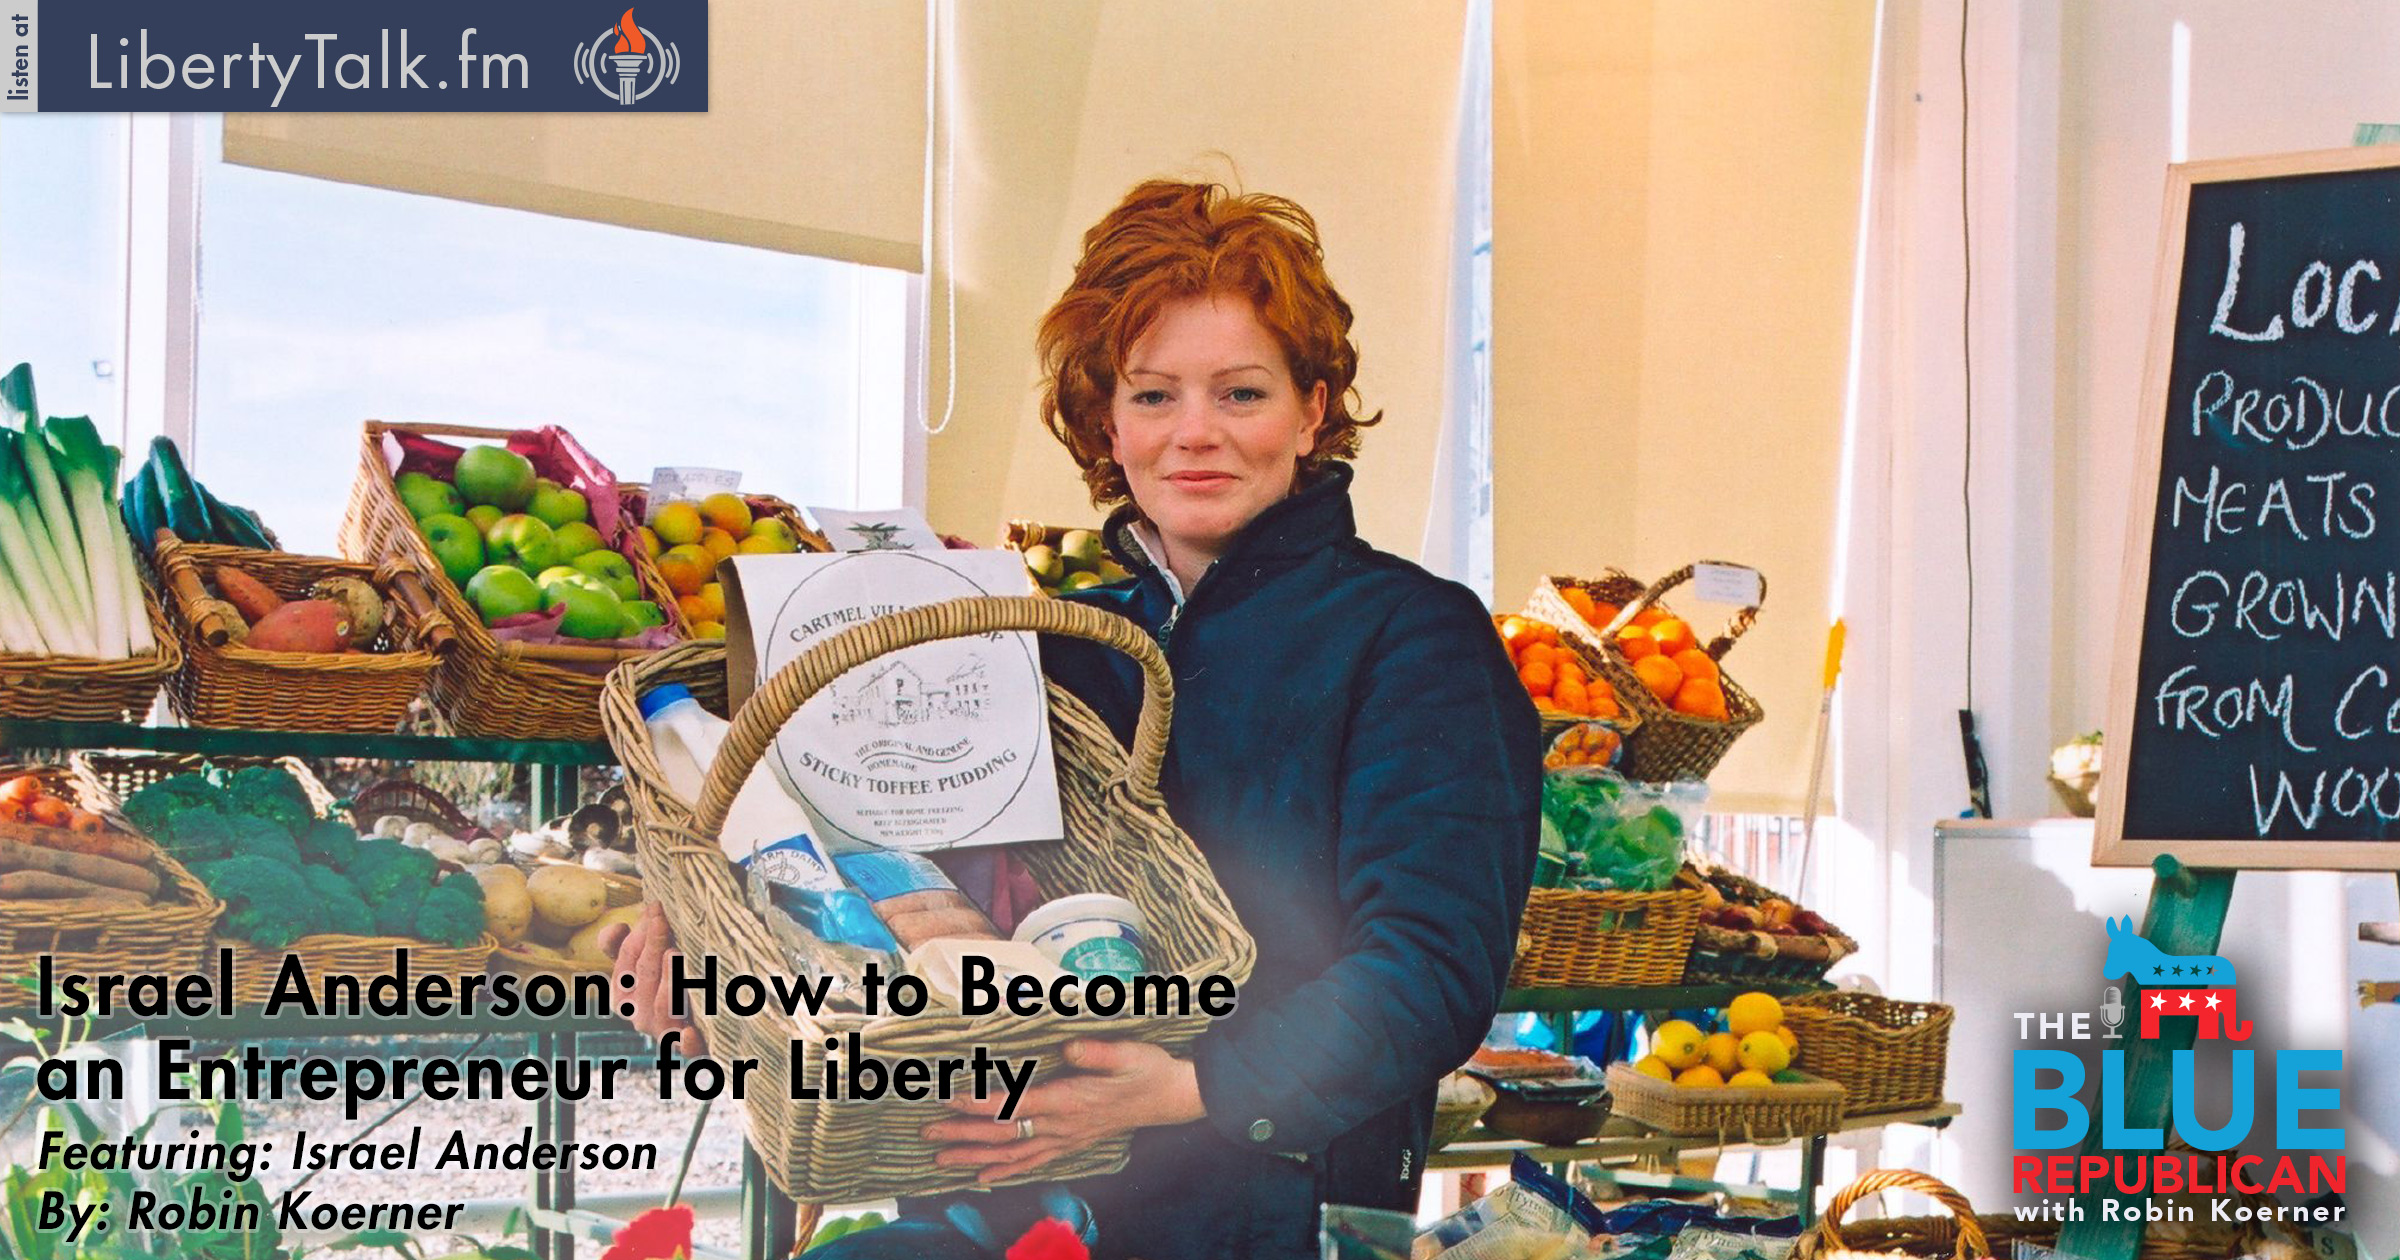 Entrepreneur-Entrepreneur for Liberty Israel AndersonLiberty-Israel-Anderson-Featured-Image